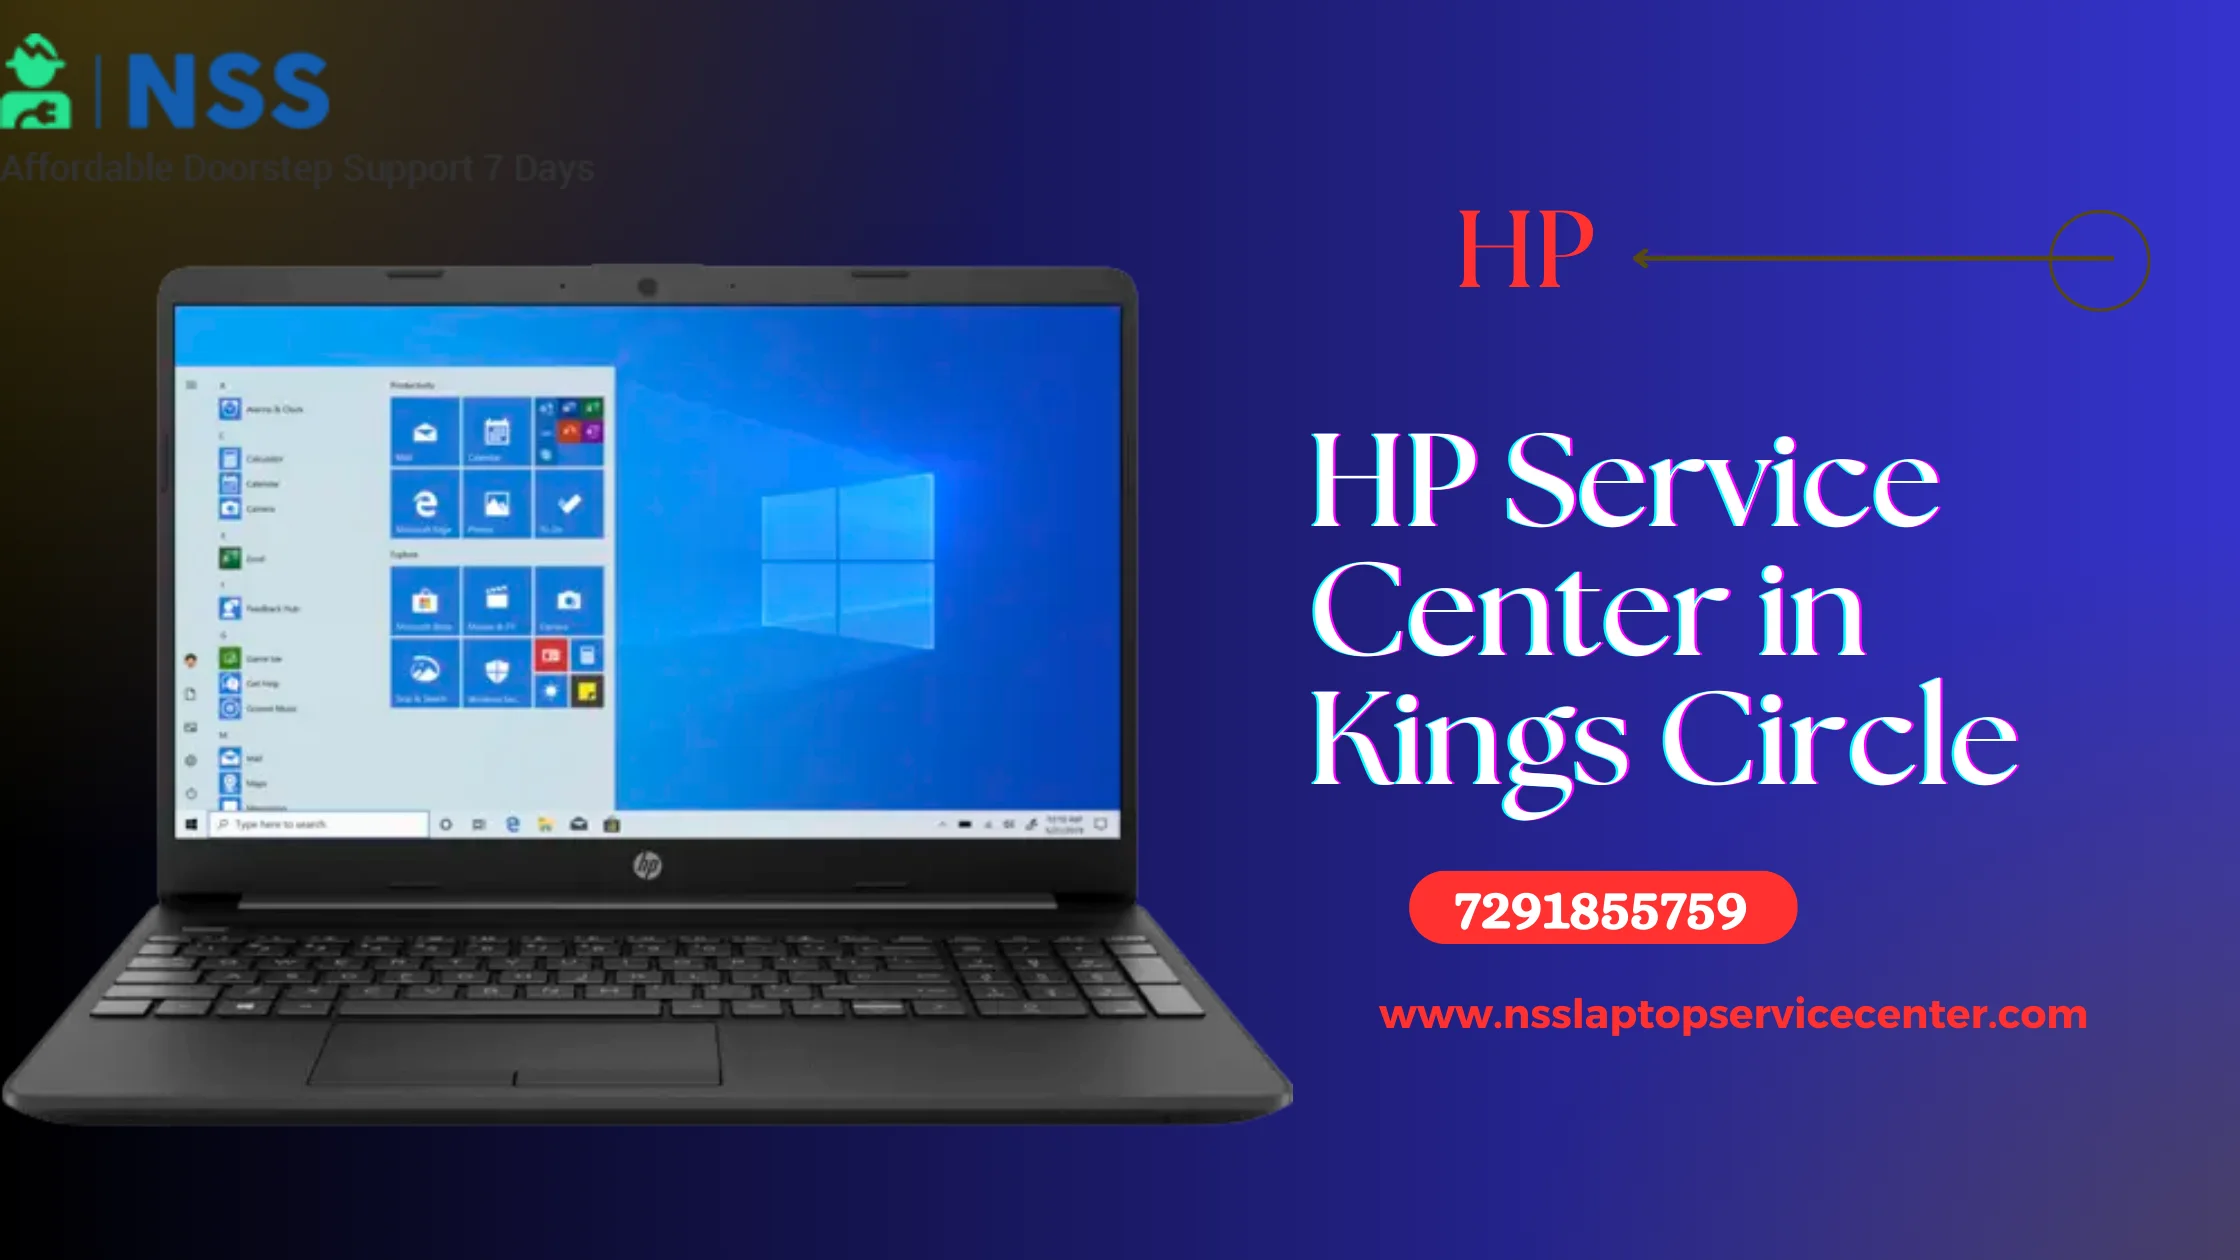 HP Service Center in Kings Circle Near Mumbai